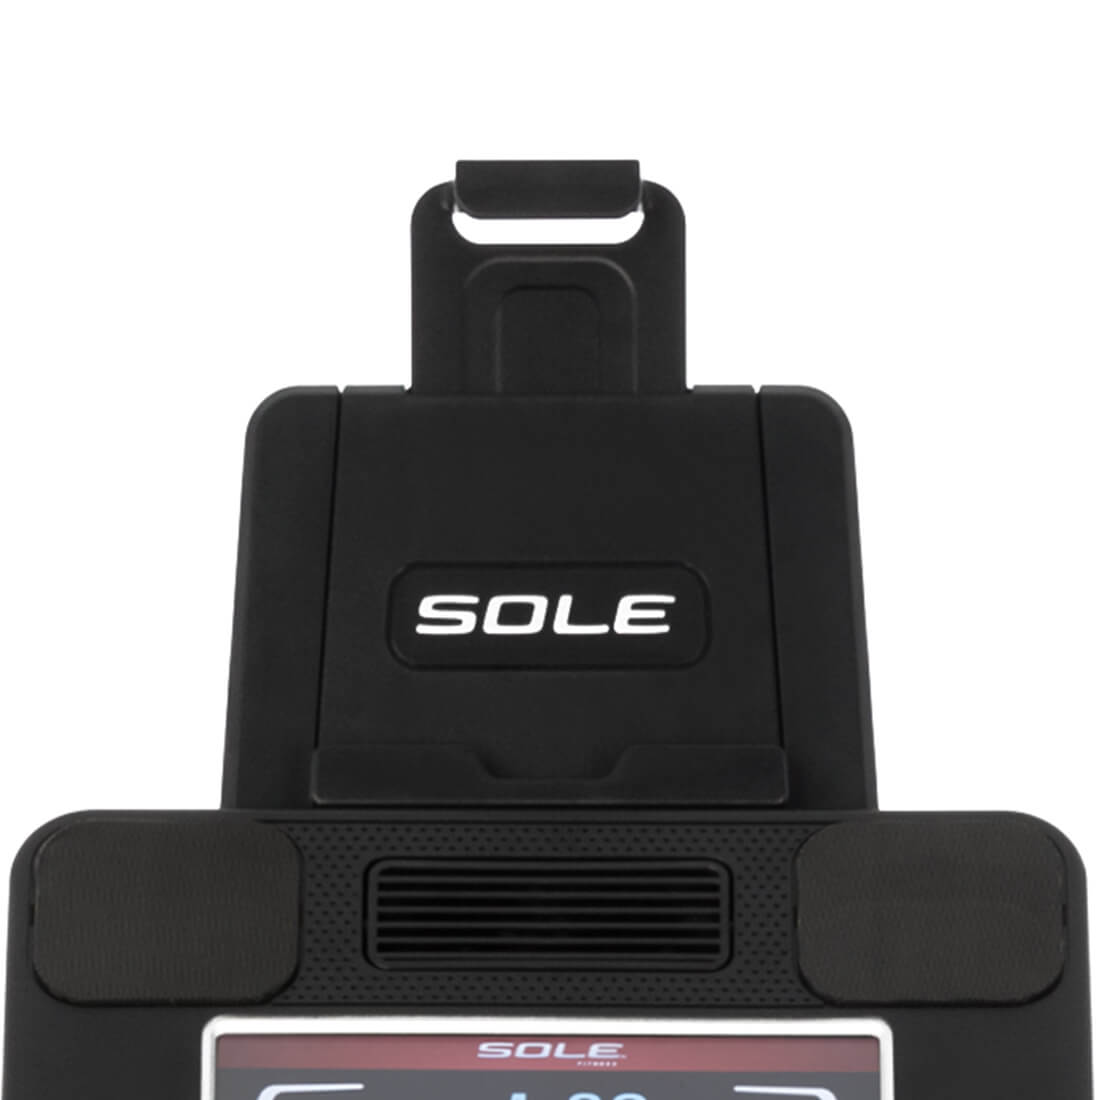 Sole TT8 (AC) Commercial Treadmill